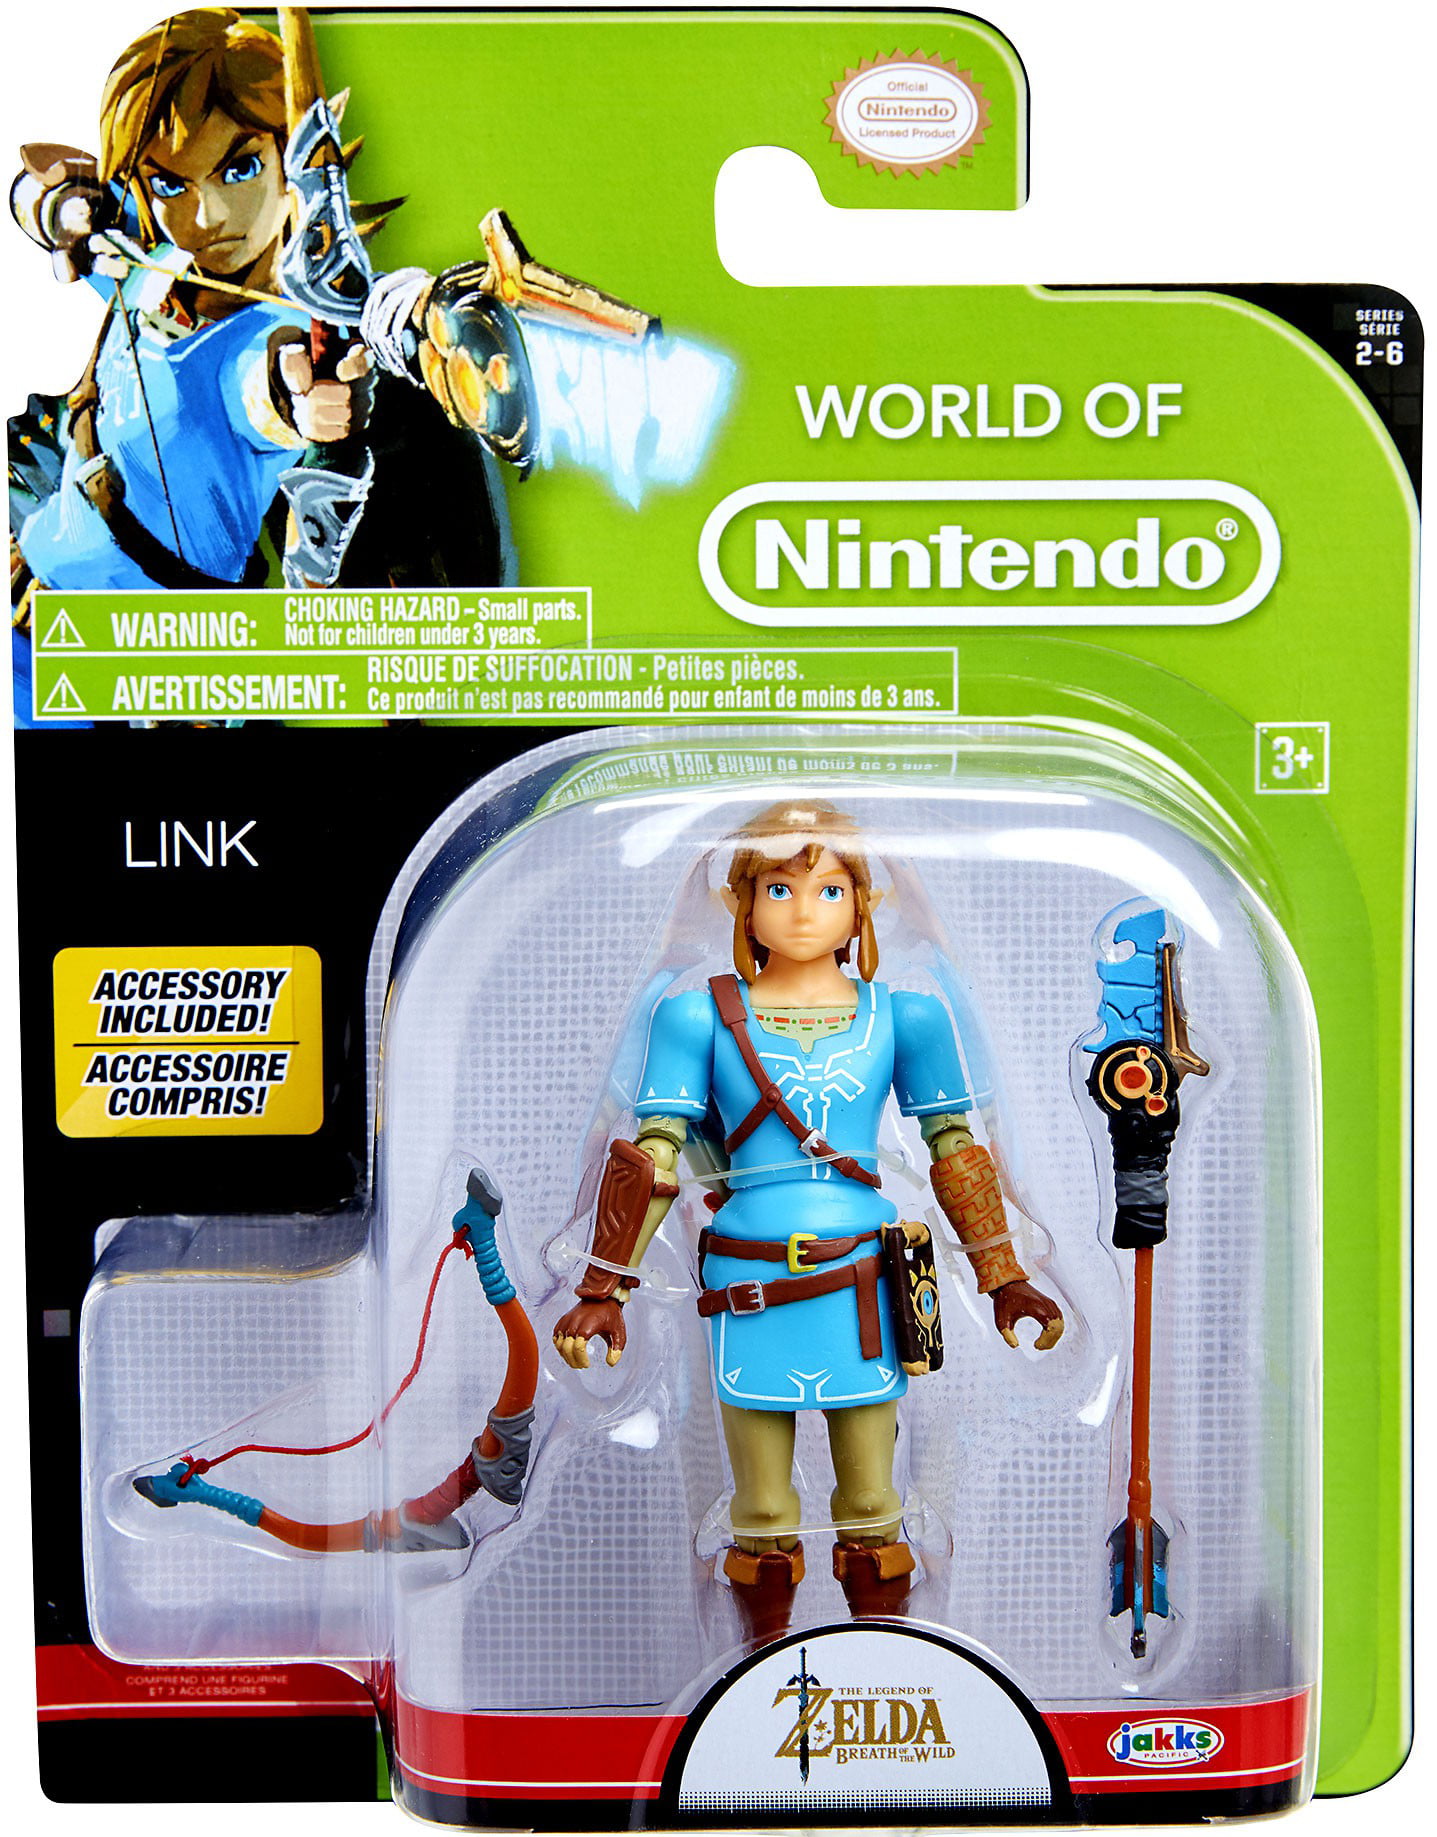 World Of Nintendo Breath Of The Wild Link Action Figure Walmart Com Walmart Com